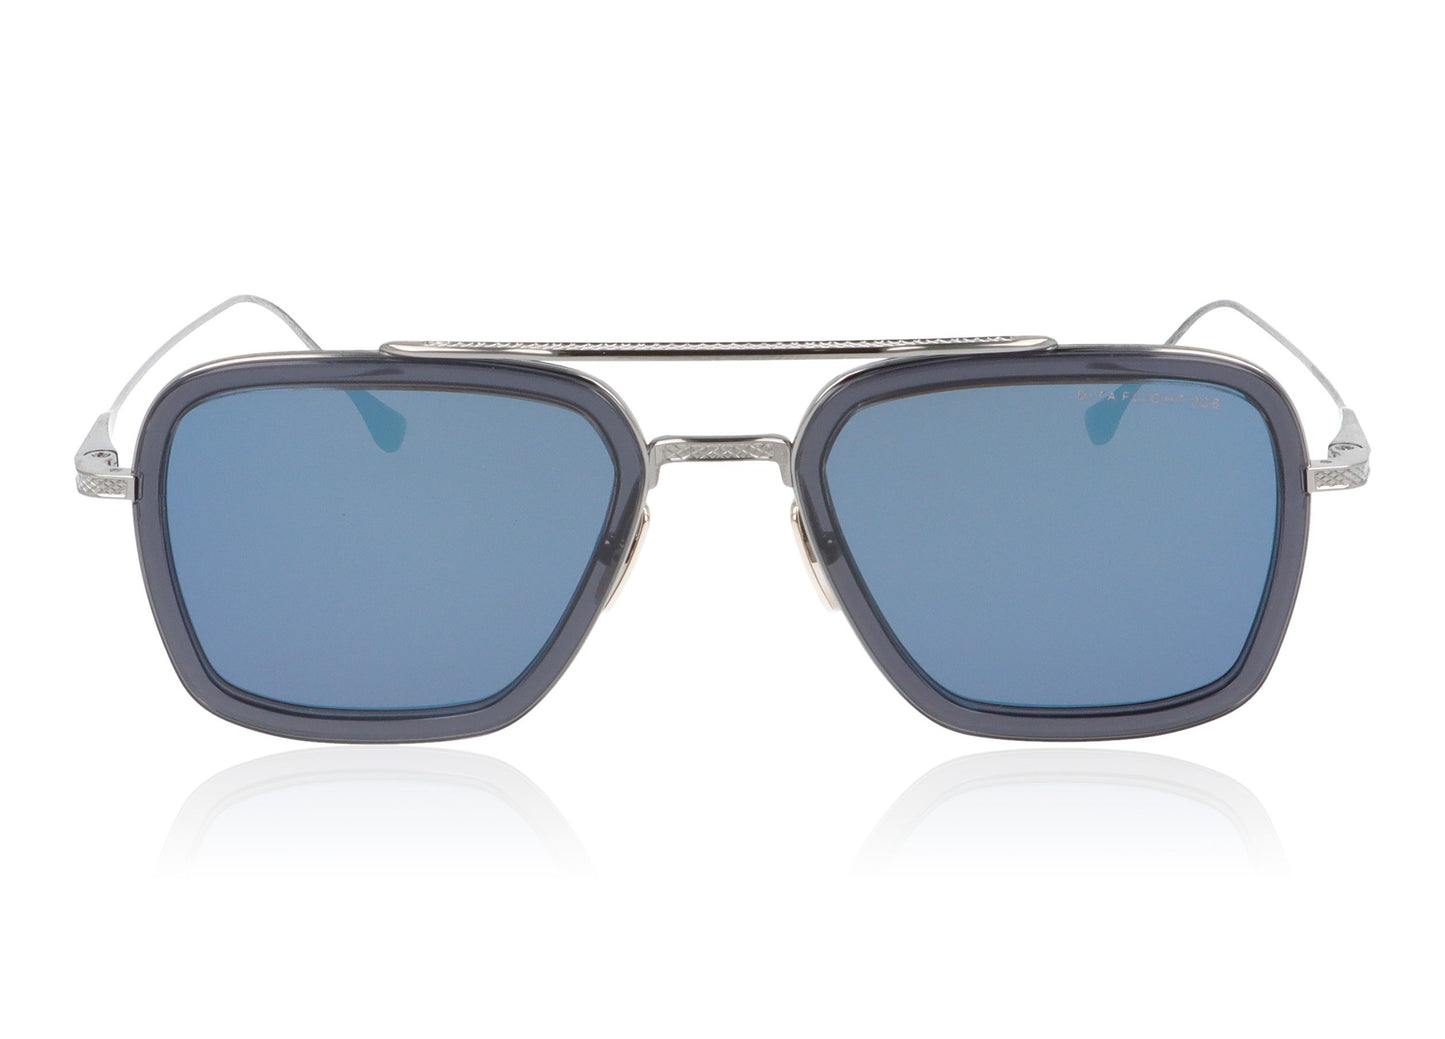 DITA Flight SMK-PLD Silver and Blue Sunglasses - Front